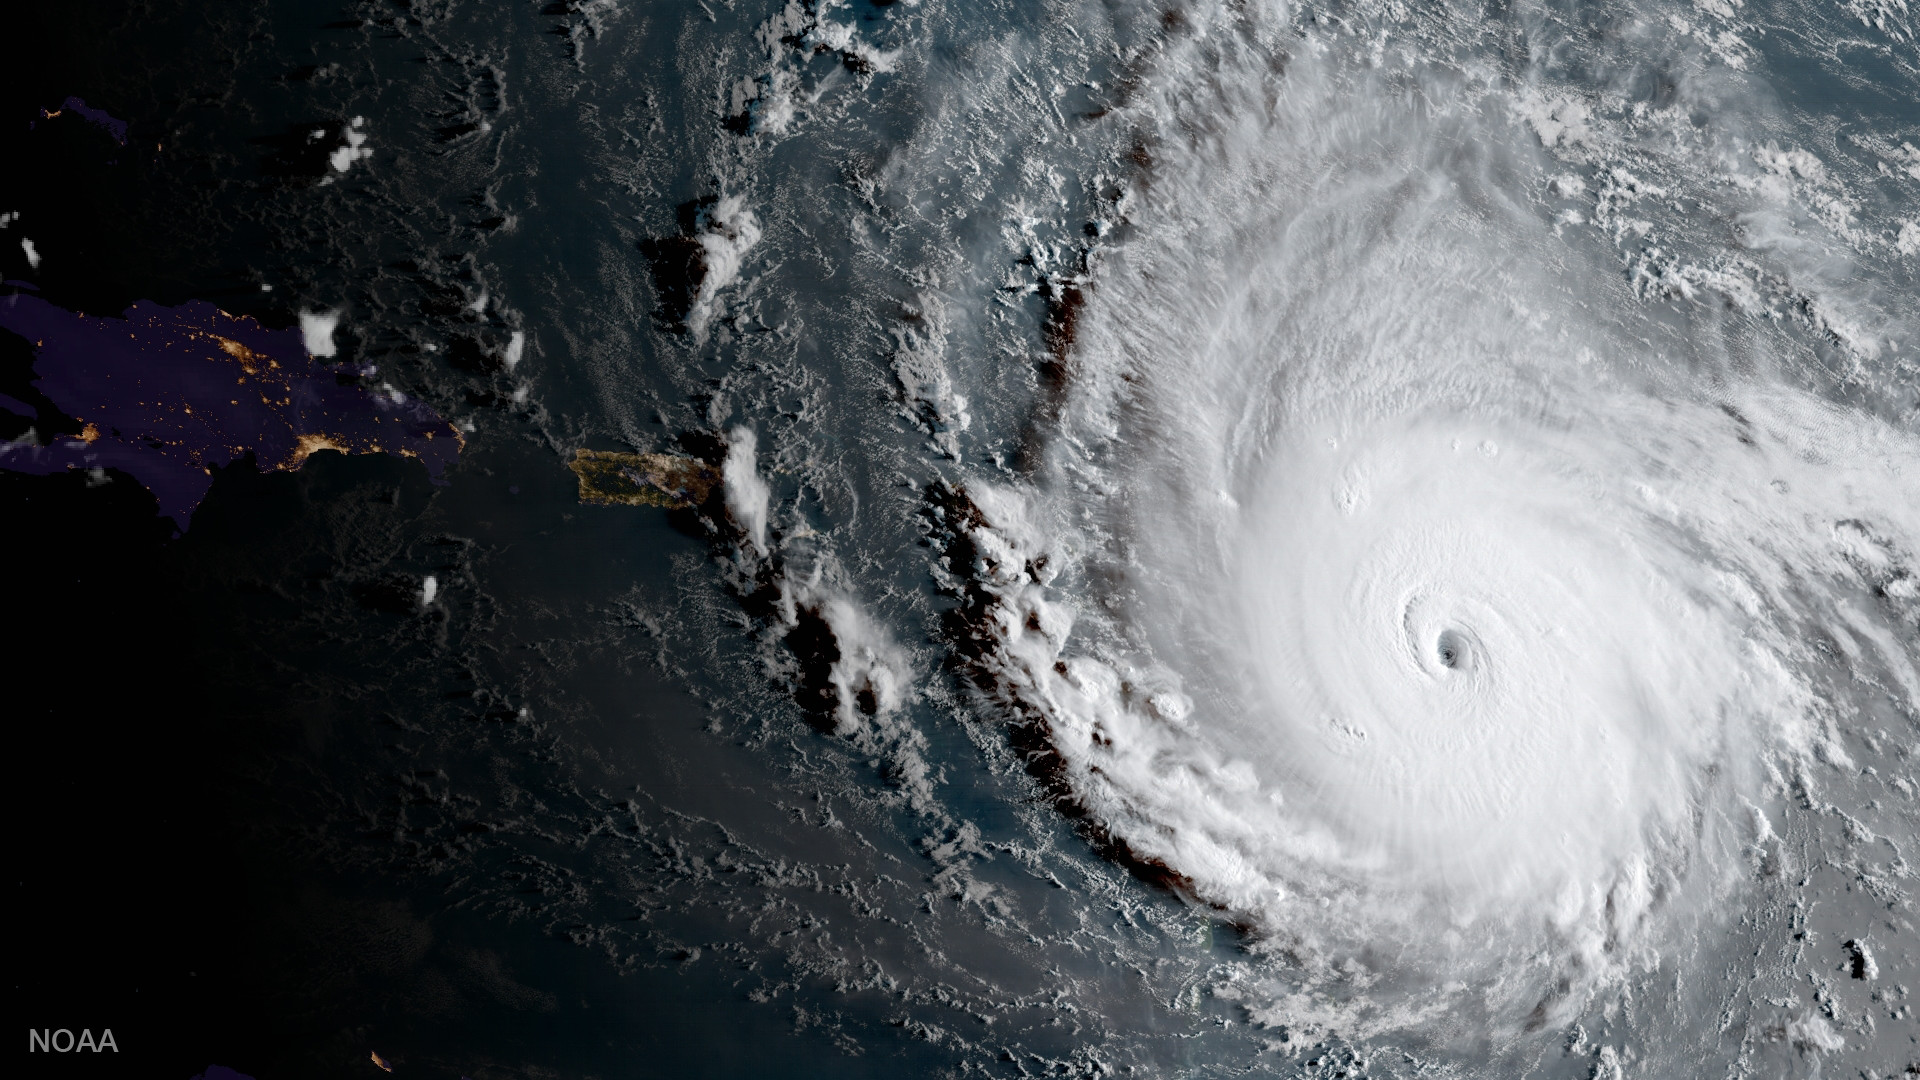 1920x1080 NOAA Hurricane Irma barreling toward the Eastern Caribbean, captured by  satellite on Tuesday, Sept. 5, 2017.